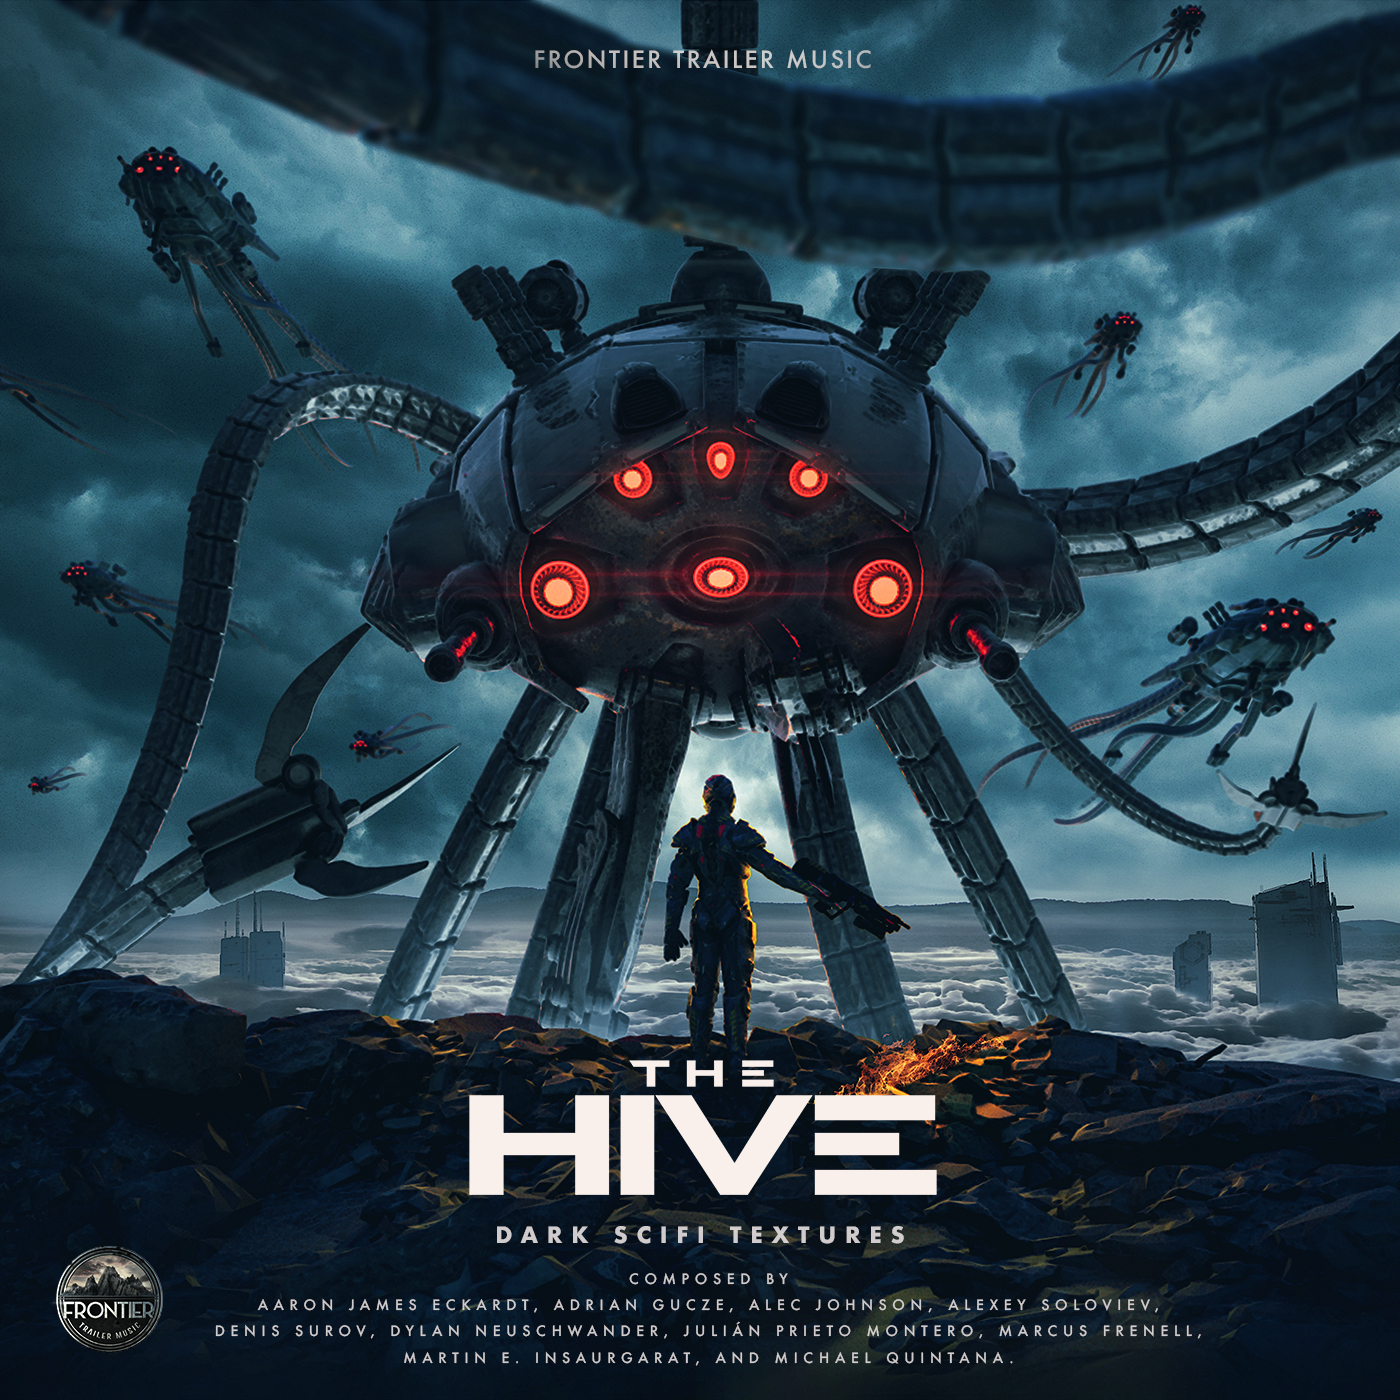 ftm008-the-hive-hd